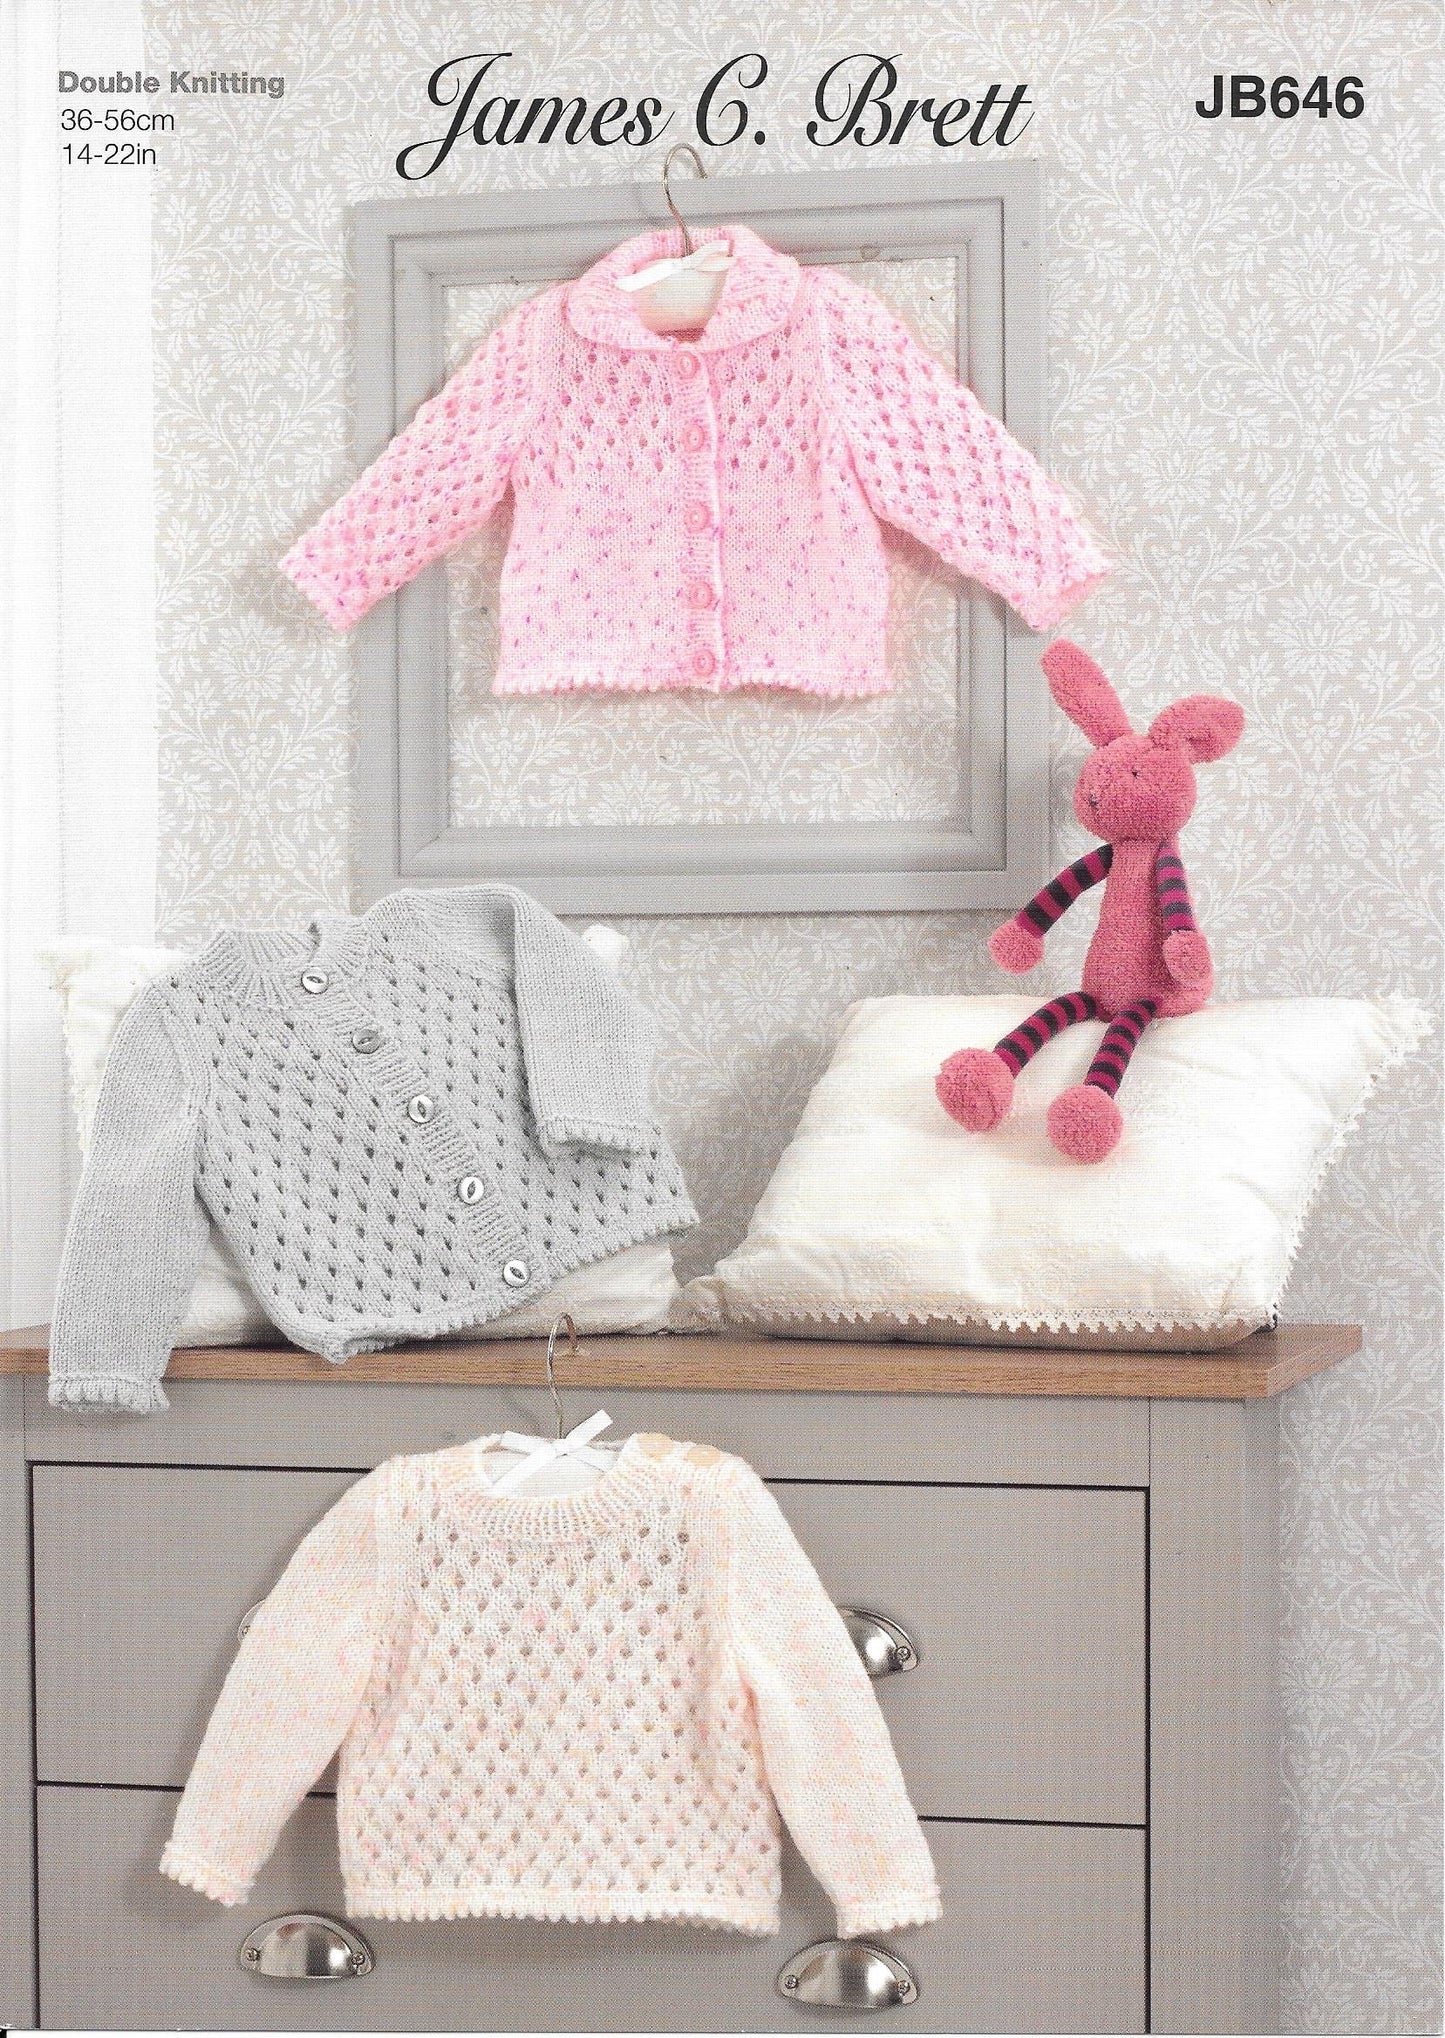 646 JB646 James C Brett Rainbow Sprinkles and Innocence dk baby cardigans and sweater knitting pattern